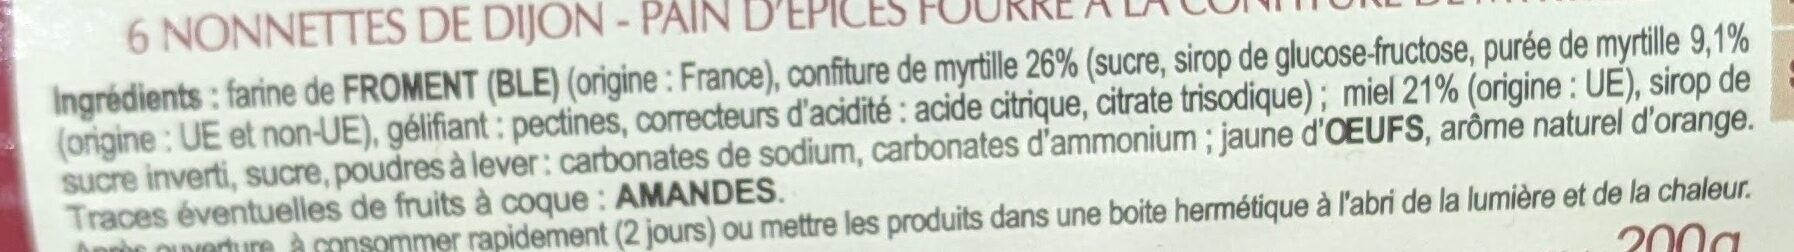 Nonnettes myrtille - Ingredients - fr